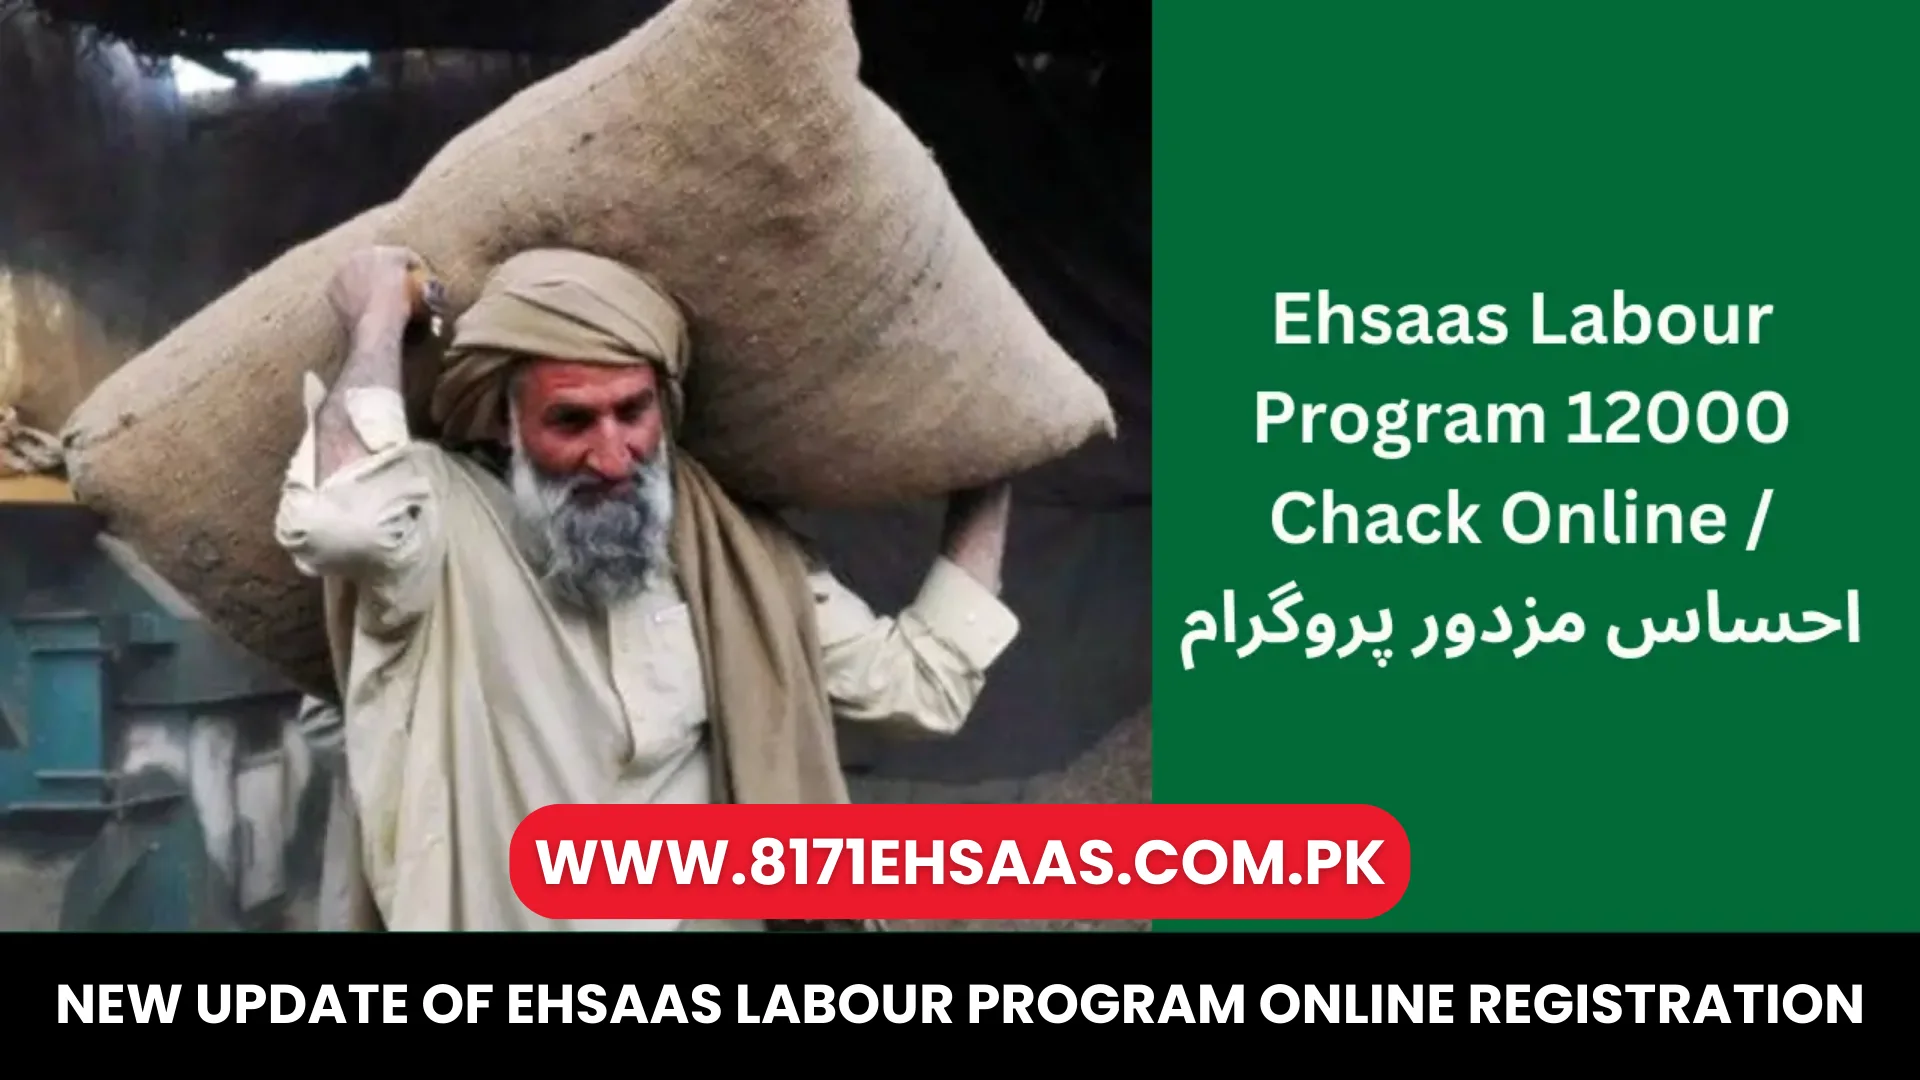 New Update of Ehsaas Labour Program Online Registration